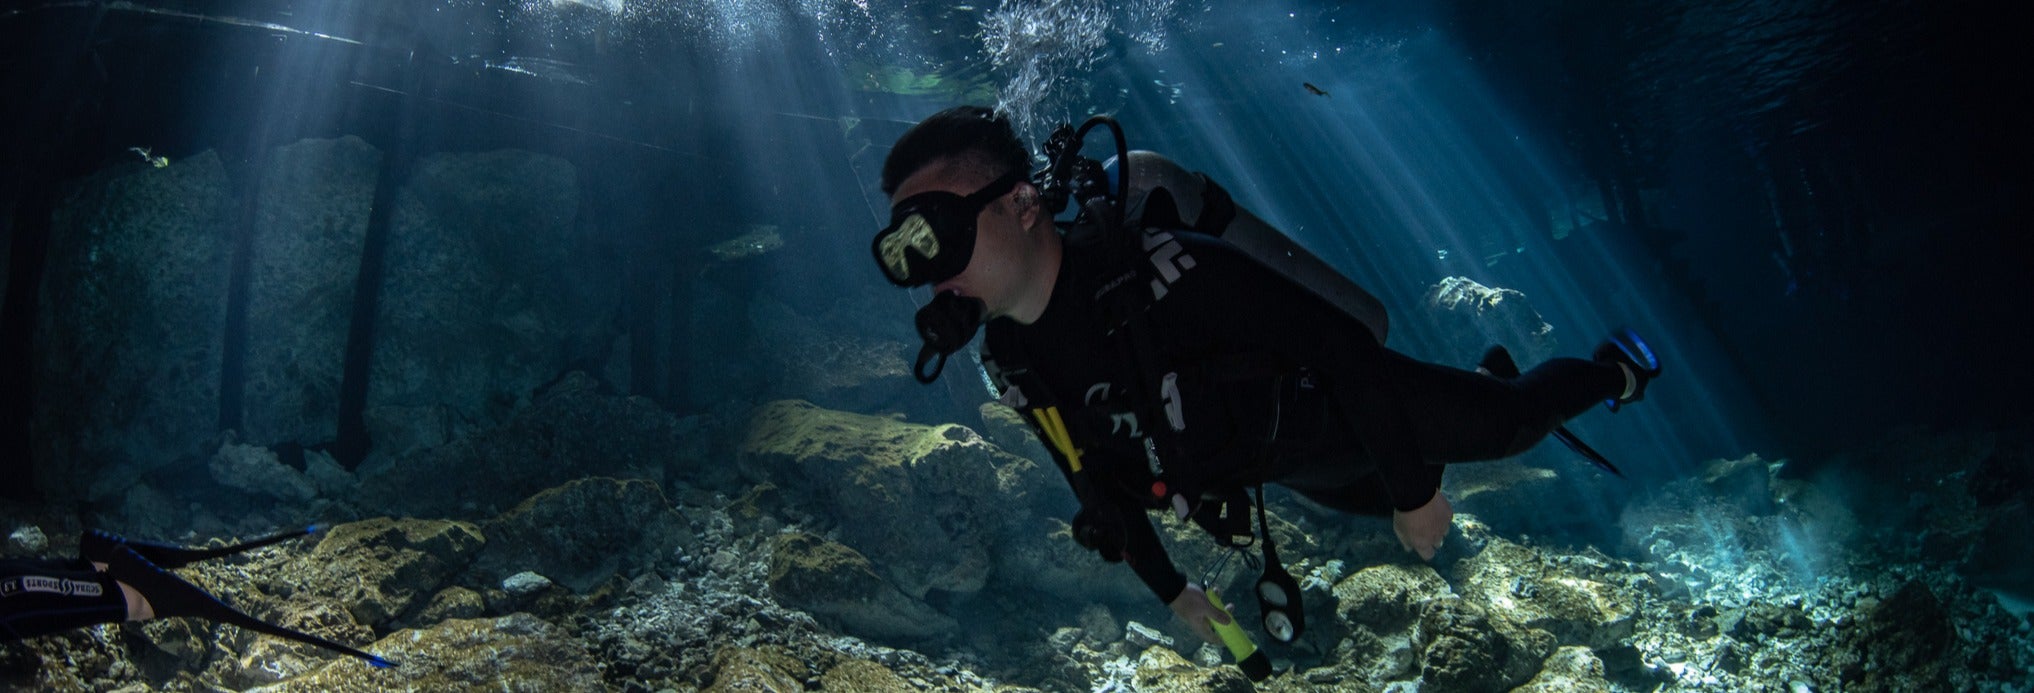 Cenote Dos Ojos Scuba Diving